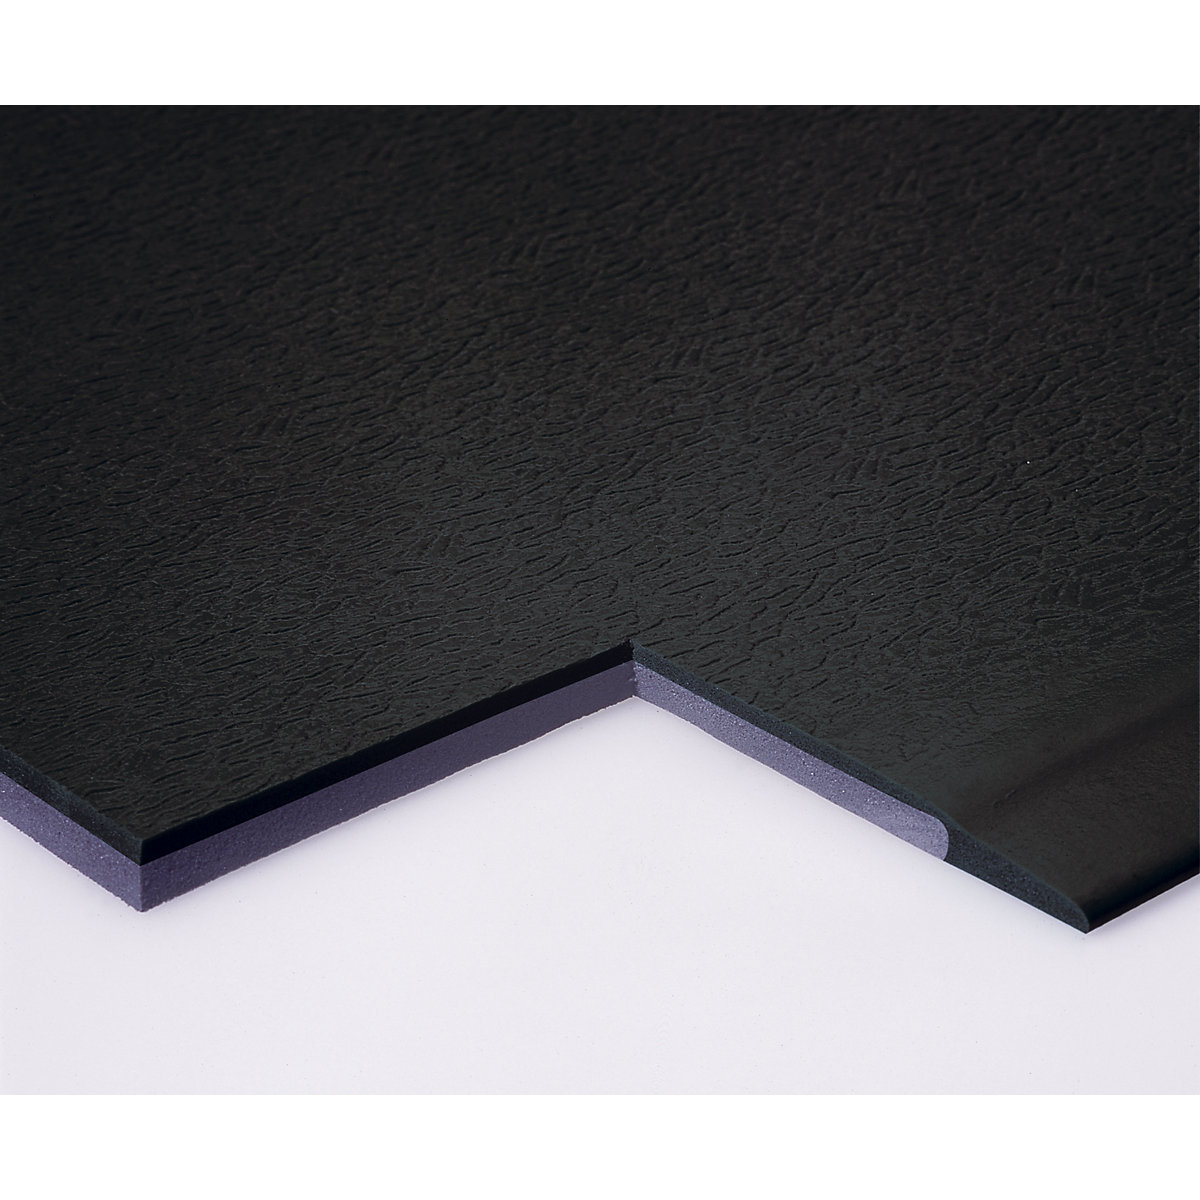 Orthomat® Premium anti-fatigue matting, width 900 mm, per m, black